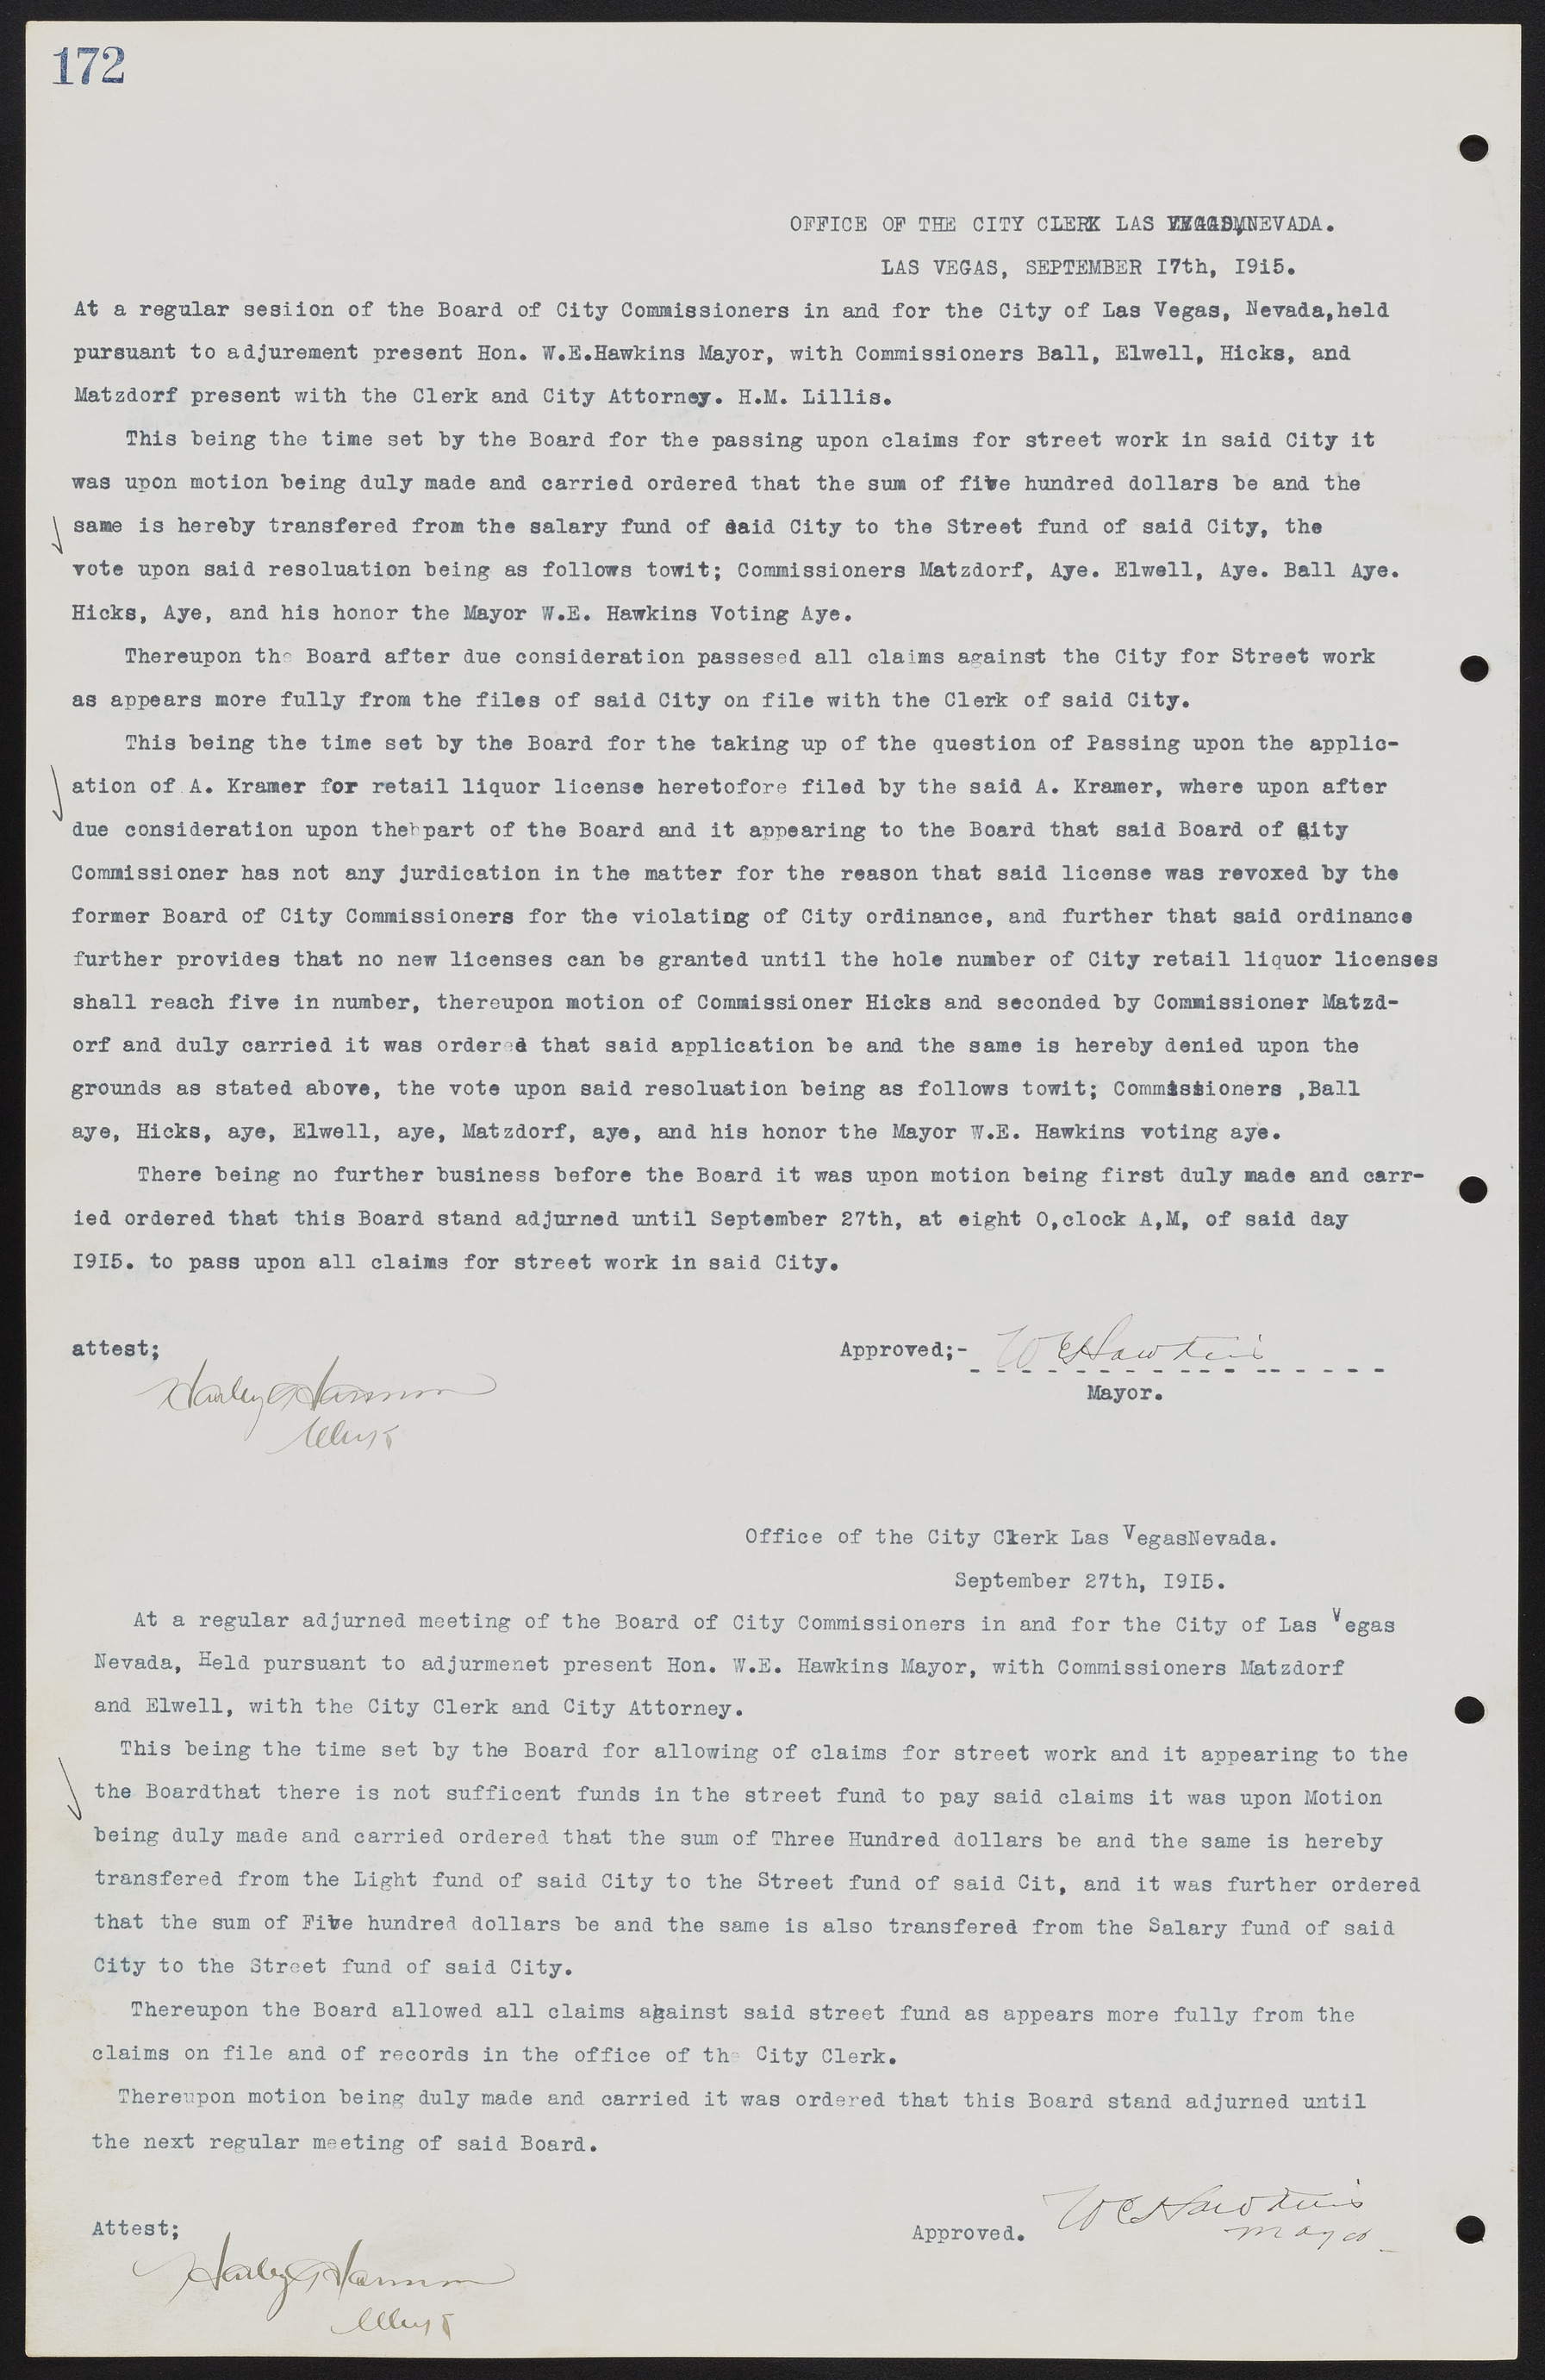 Las Vegas City Commission Minutes, June 22, 1911 to February 7, 1922, lvc000001-188